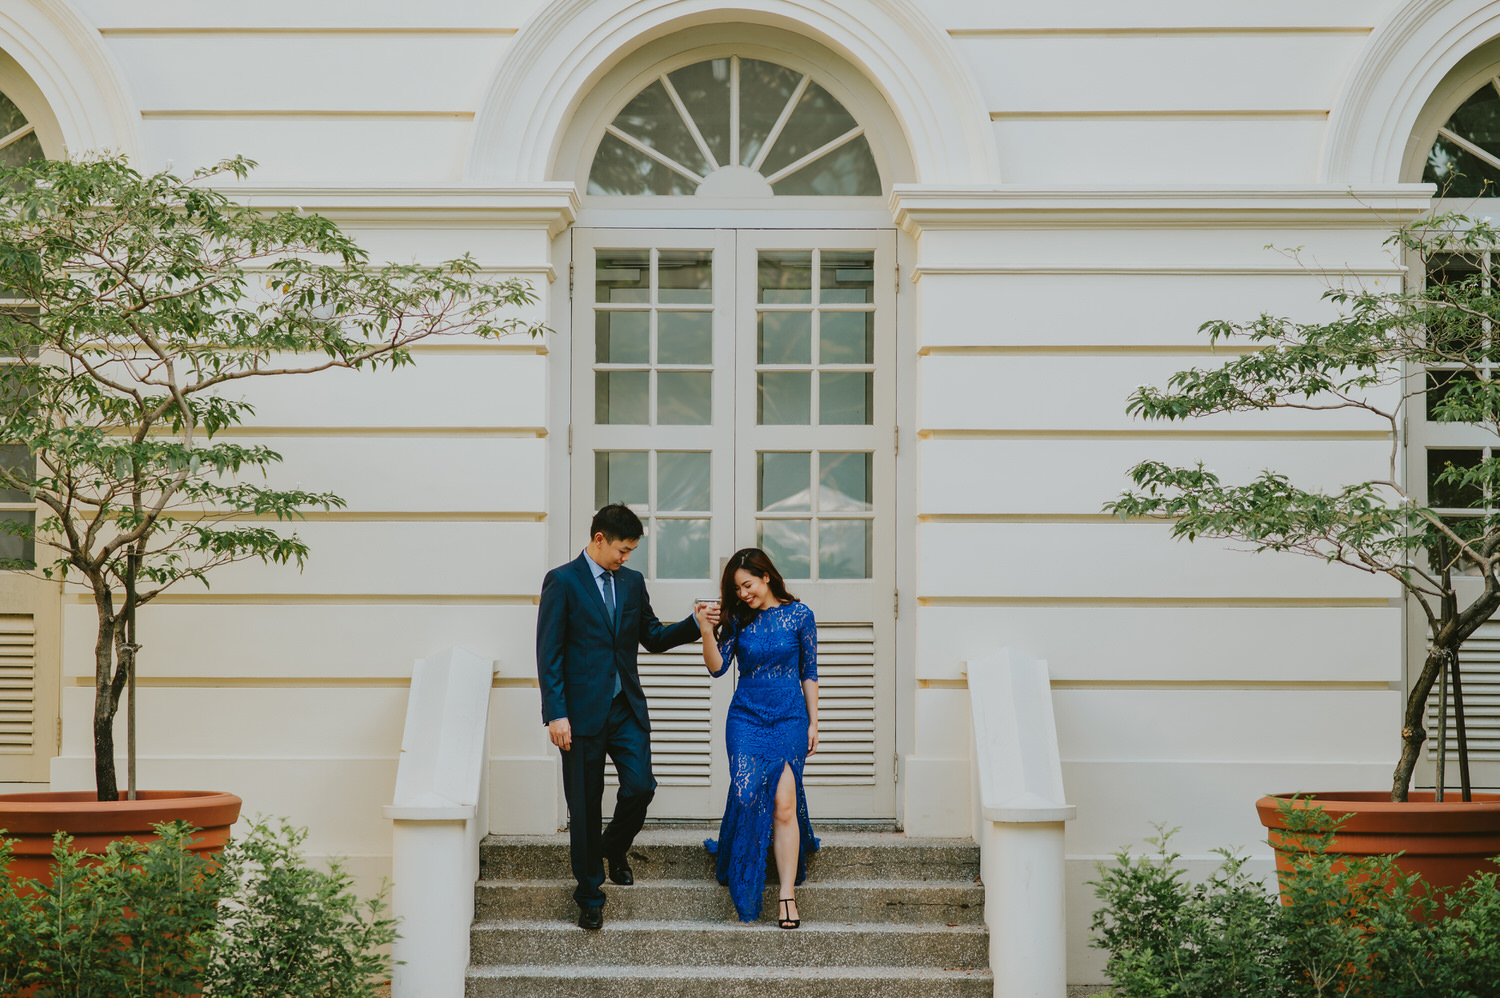 singapore prewedding destination - singapore wedding - diktatphotography - kadek artayasa - nikole + ardika - 6